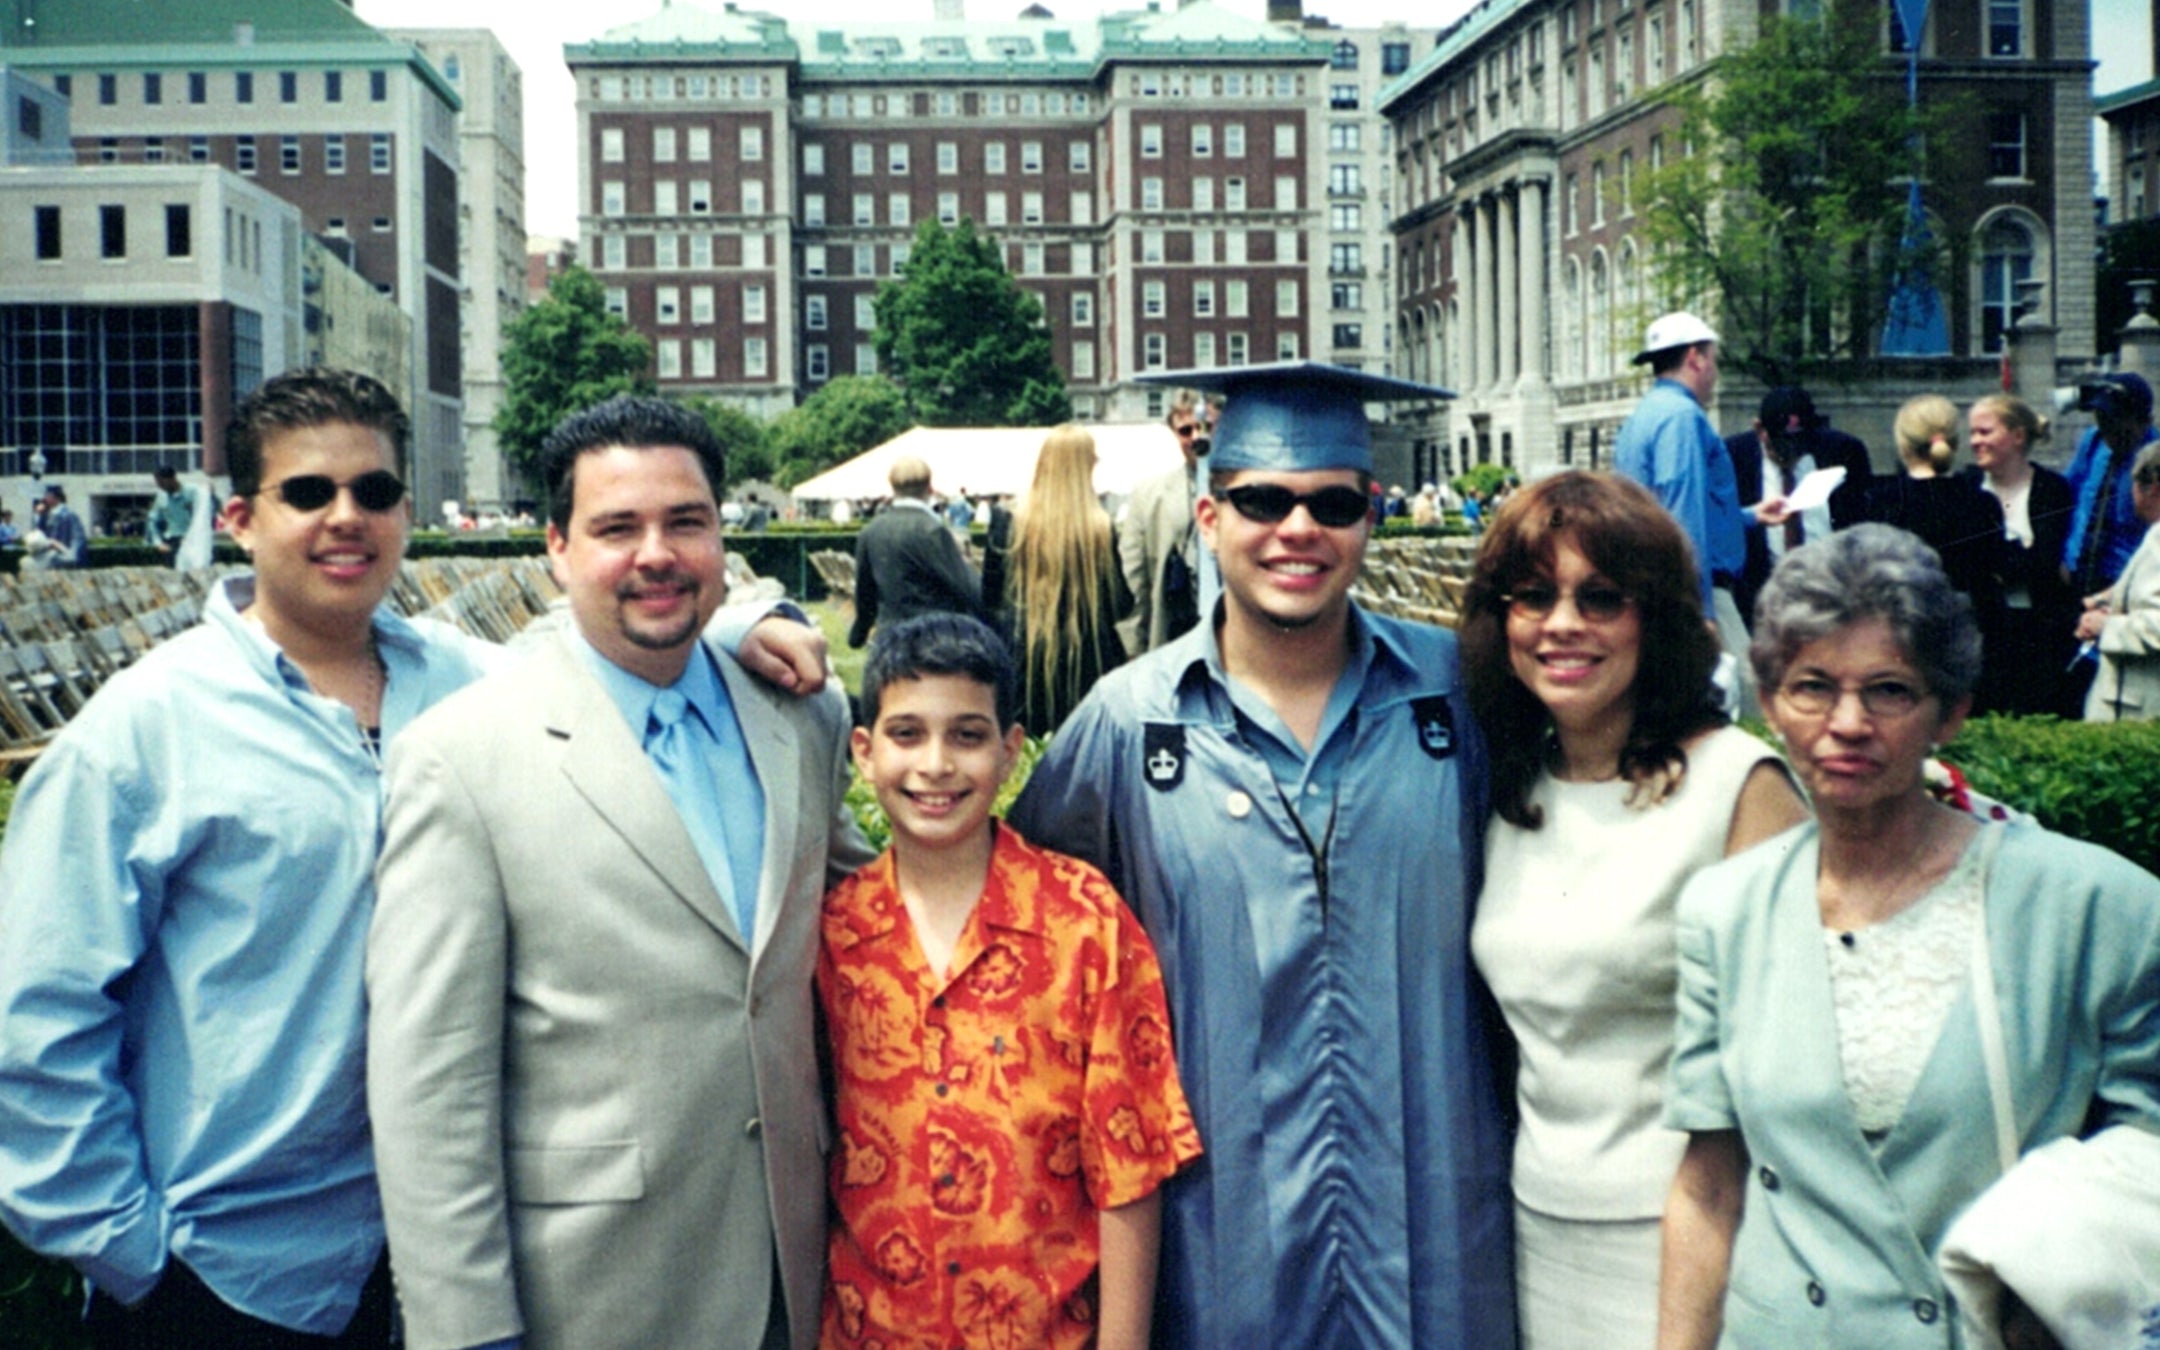 PICTURED: Anthony Ramirez II's Graduation from Columbia University